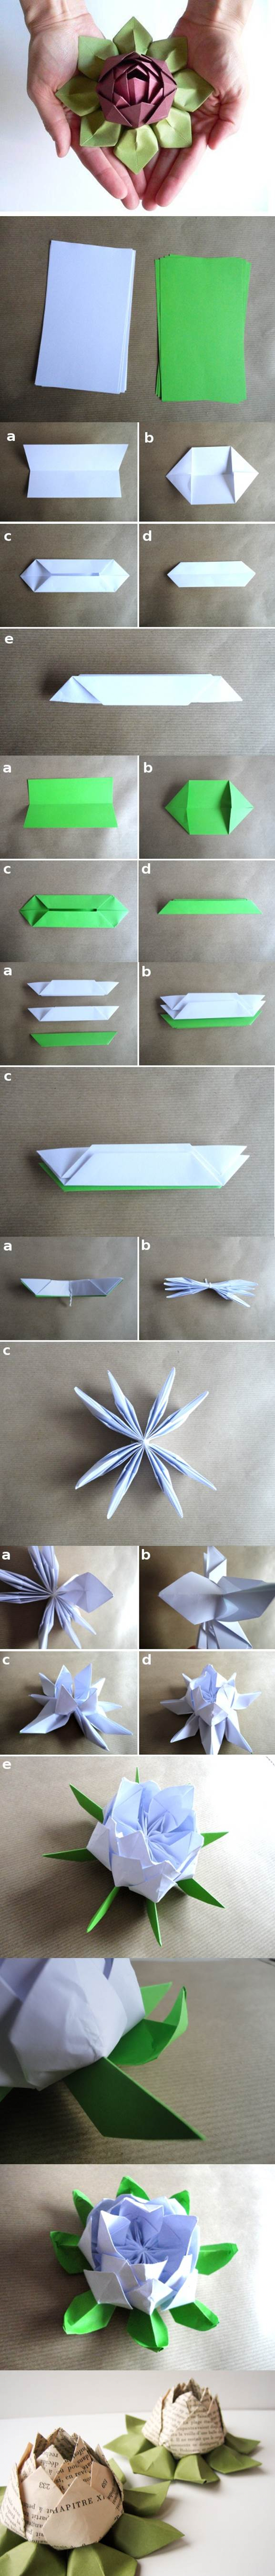 How To Make Origami Lotus Flower Video Diy Origami Lotus Flower